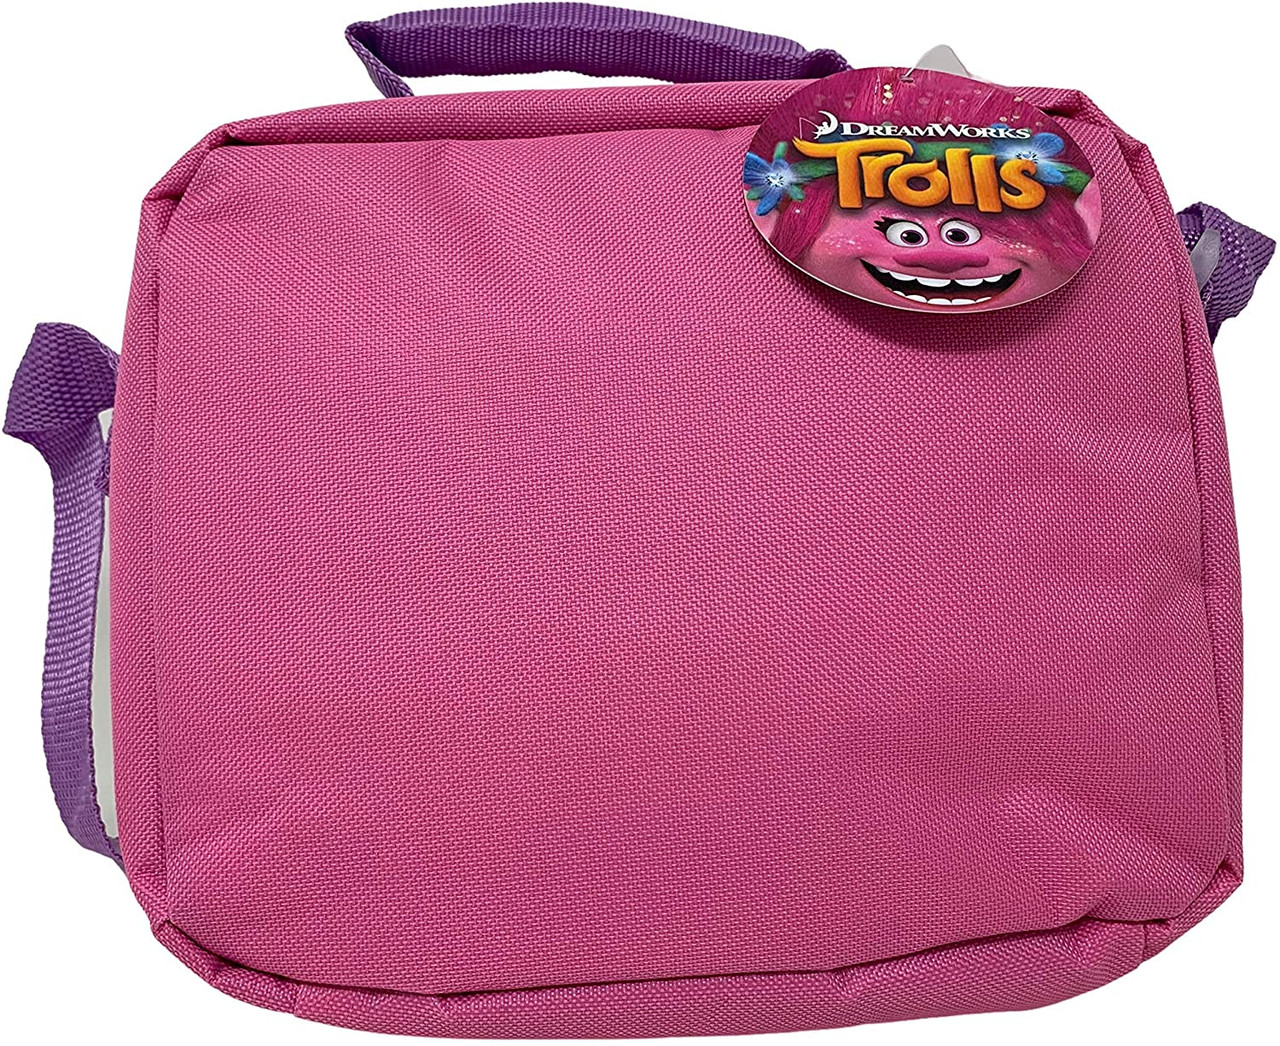 Trolls Dreamworks 9 Lunch Bag with Strap - Curious Bazaar